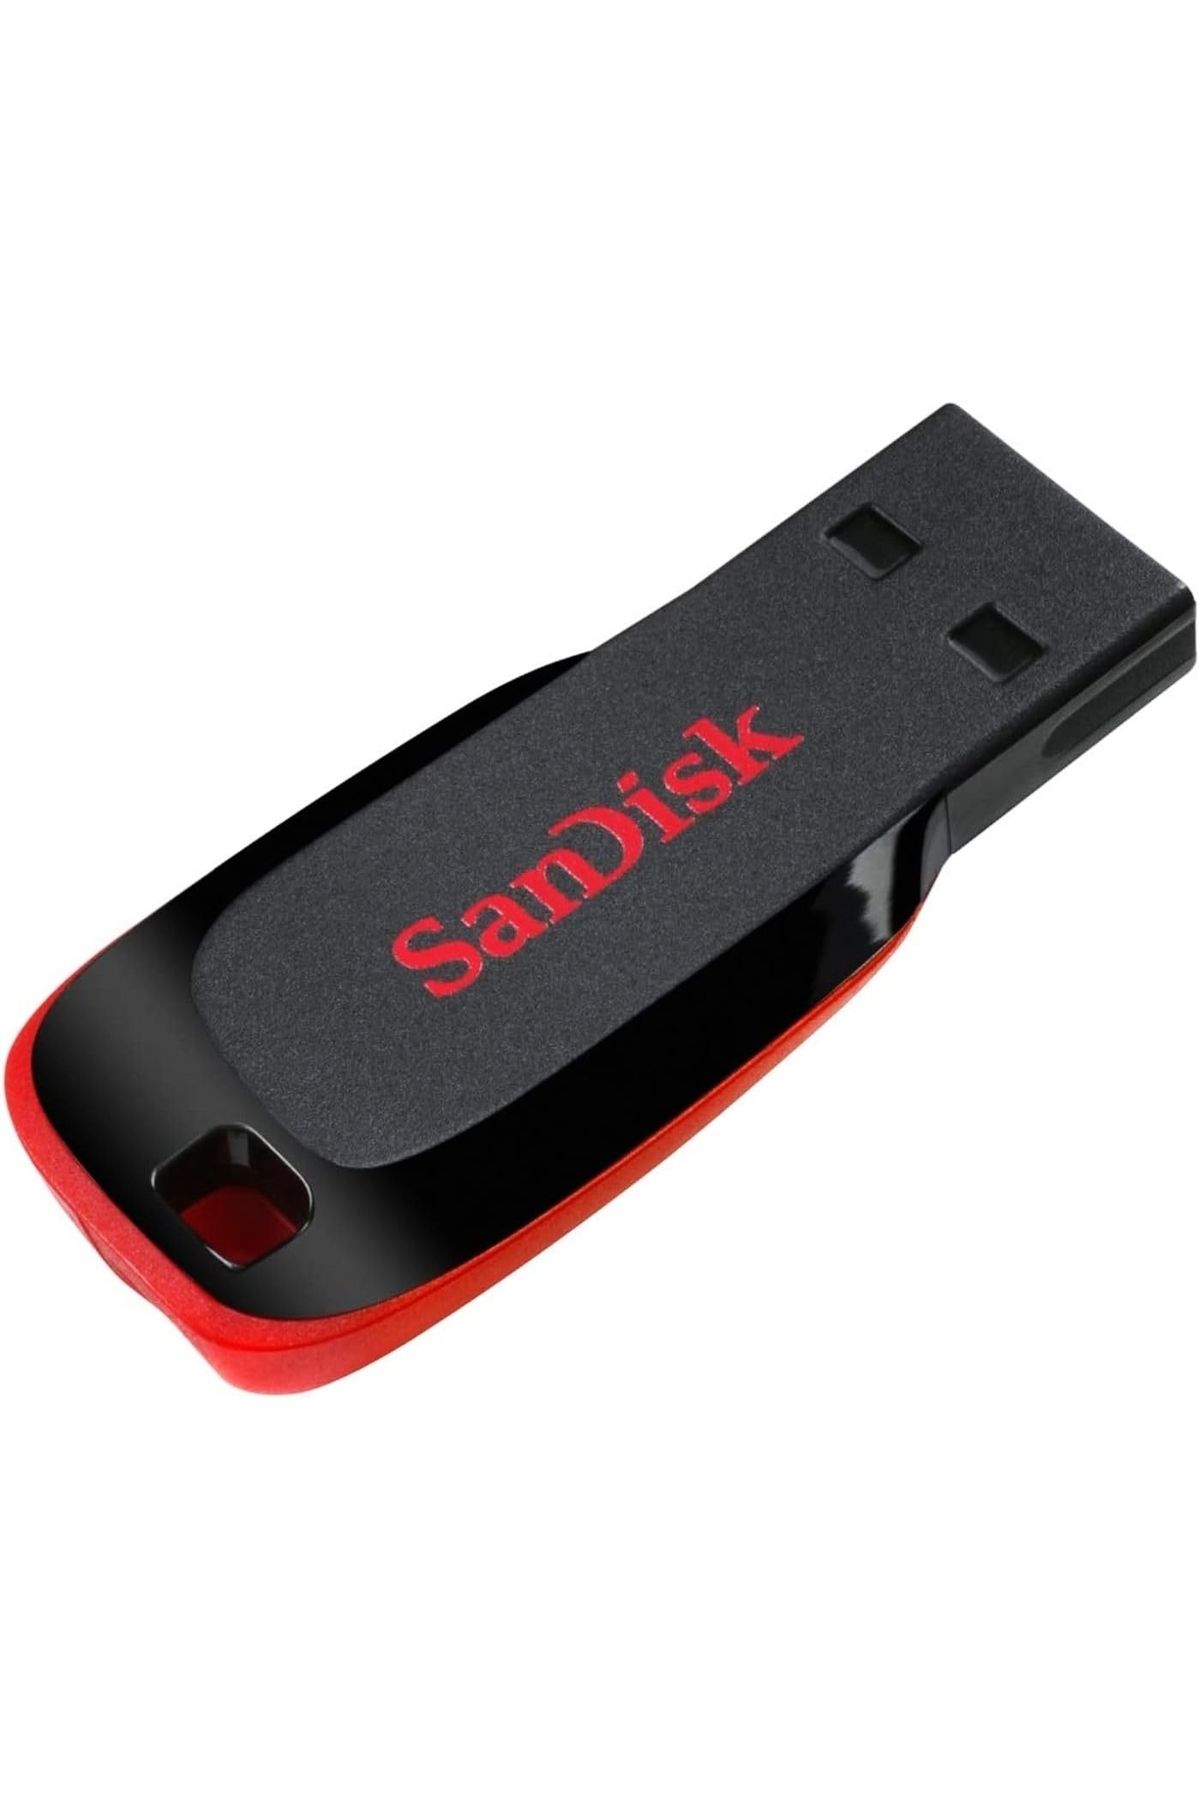 Sandisk 16 GB Flash Bellek Cruzer 16 GB Usb Bellek 16 GB USB 2.0 Flash Disc 16 GB Flash Disk 16 GB FlashDisk